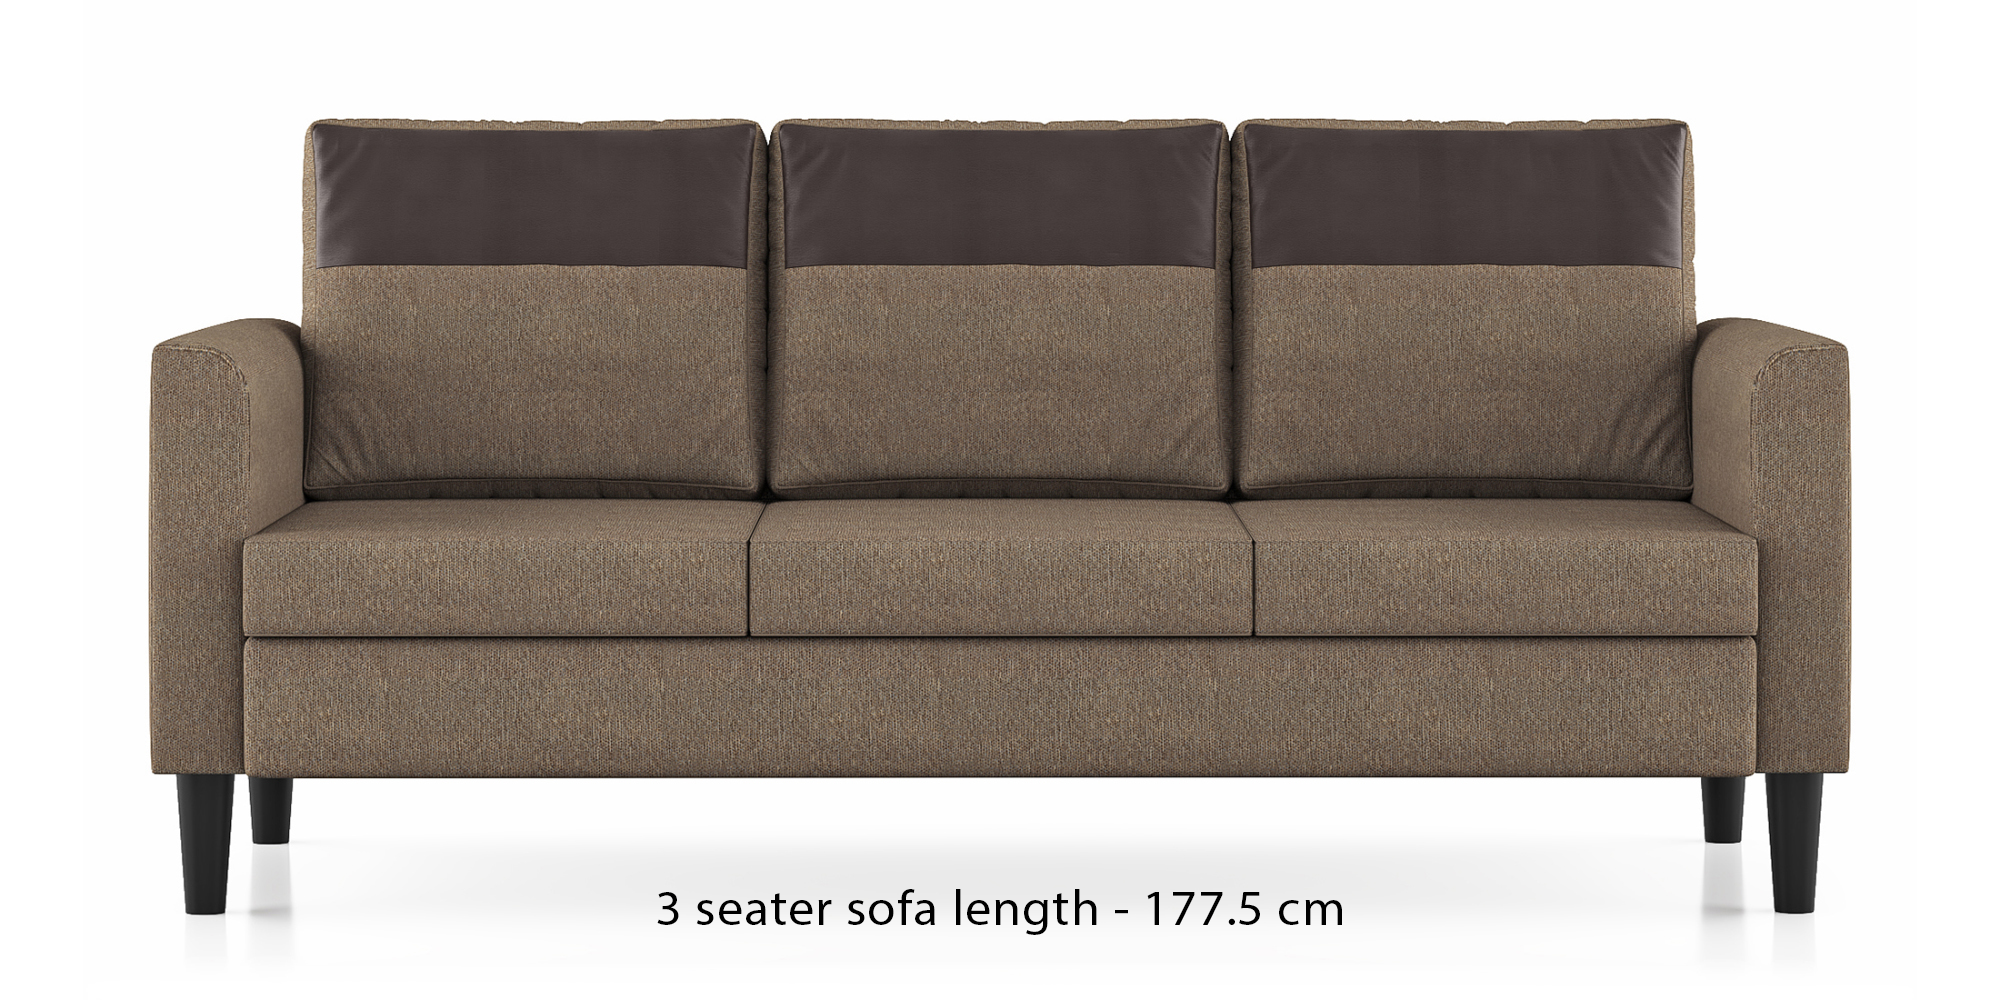 Hugo Fabric Sofa (Oat Beige) (3-seater Custom Set - Sofas, None Standard Set - Sofas, Fabric Sofa Material, Regular Sofa Size, Regular Sofa Type, Oat Beige) by Urban Ladder - - 575207